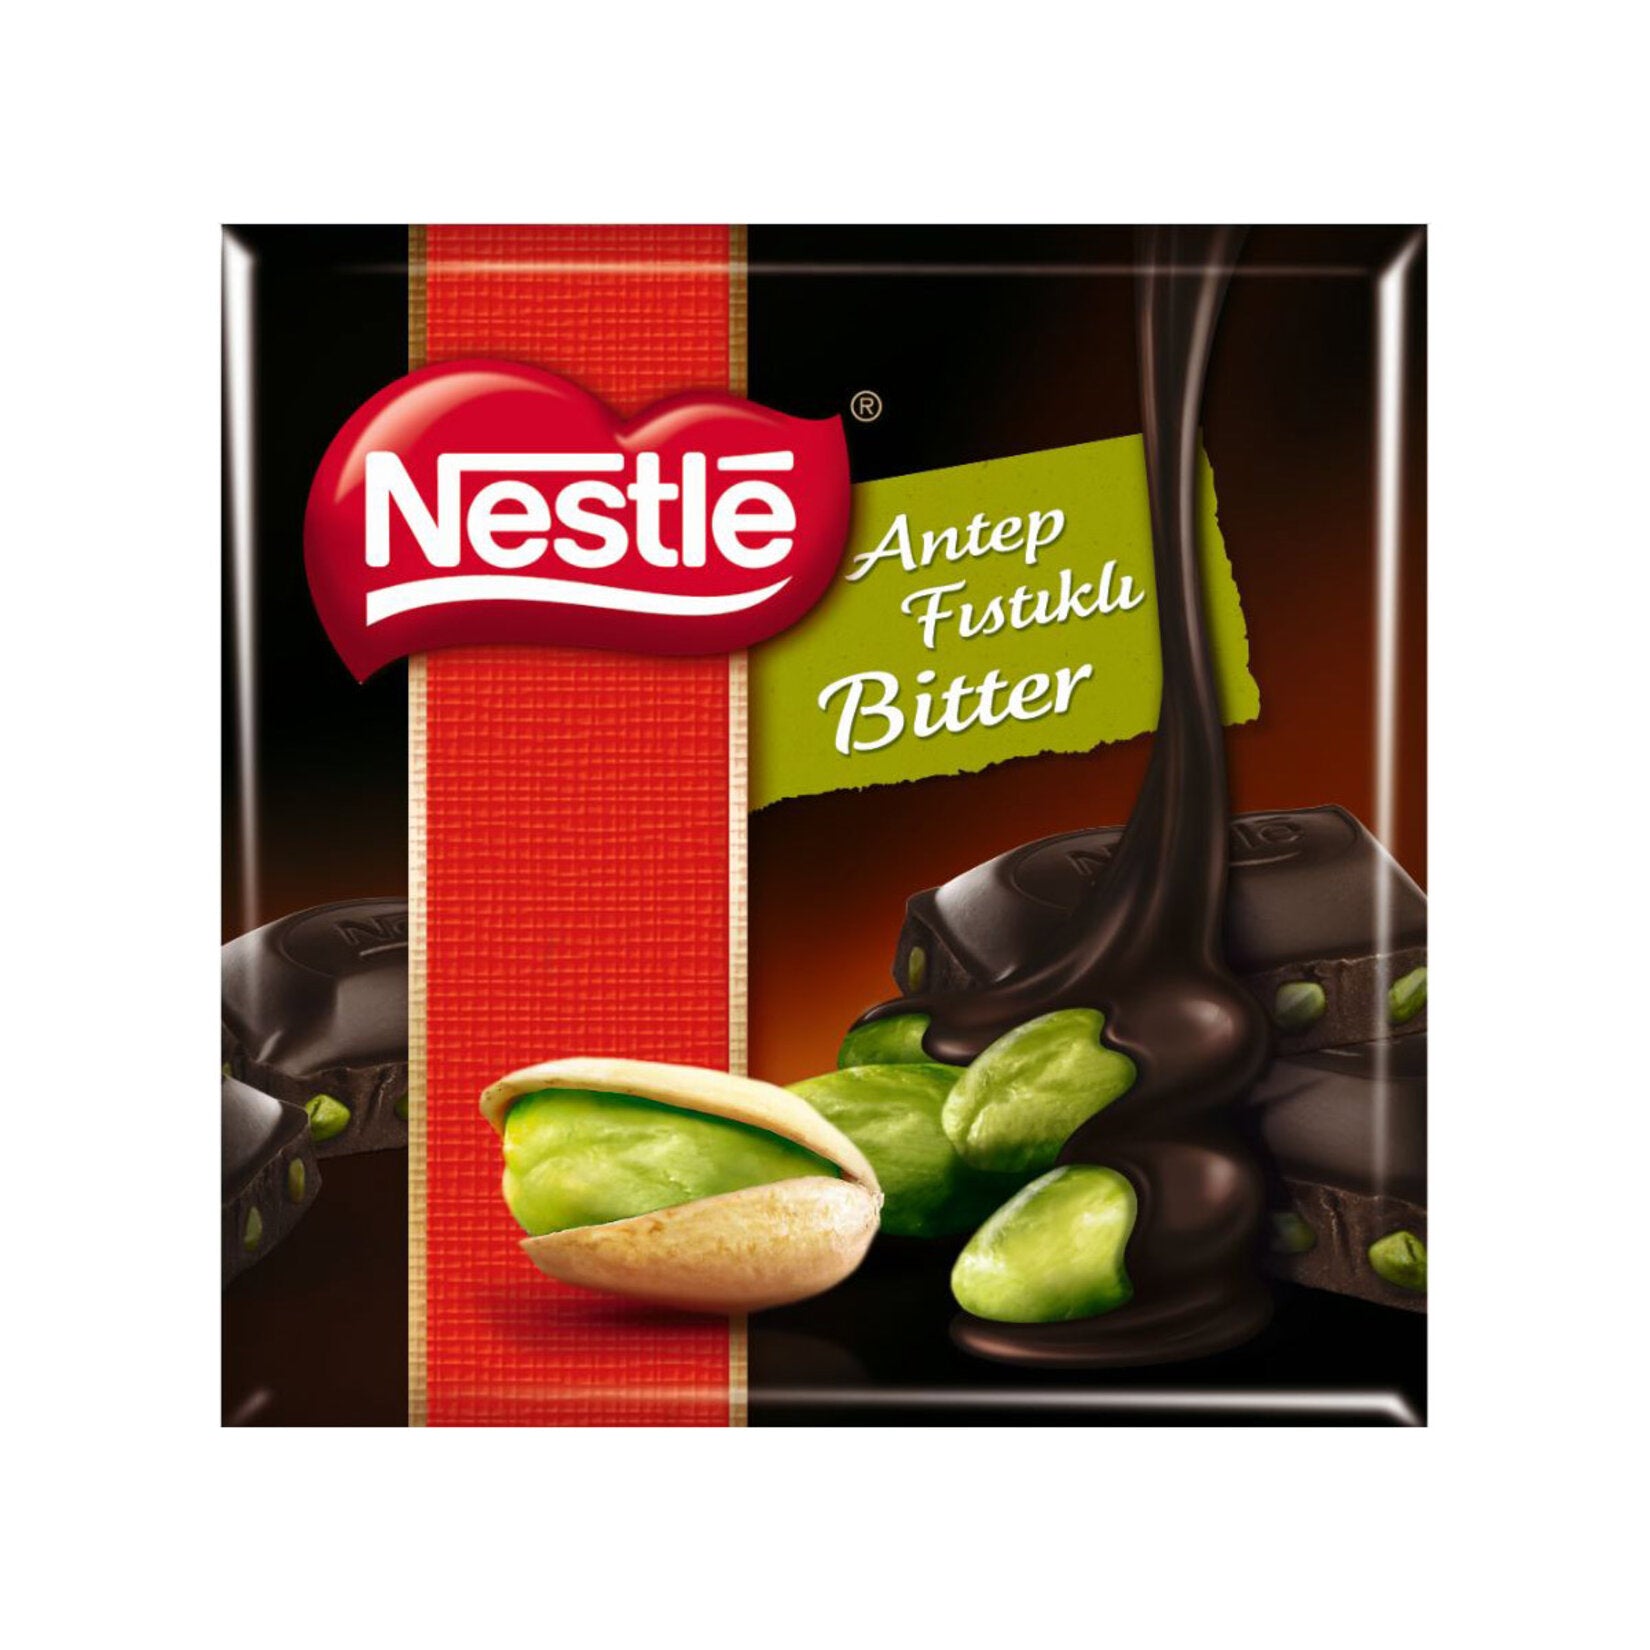 Nestle Classic Chocolate Duo